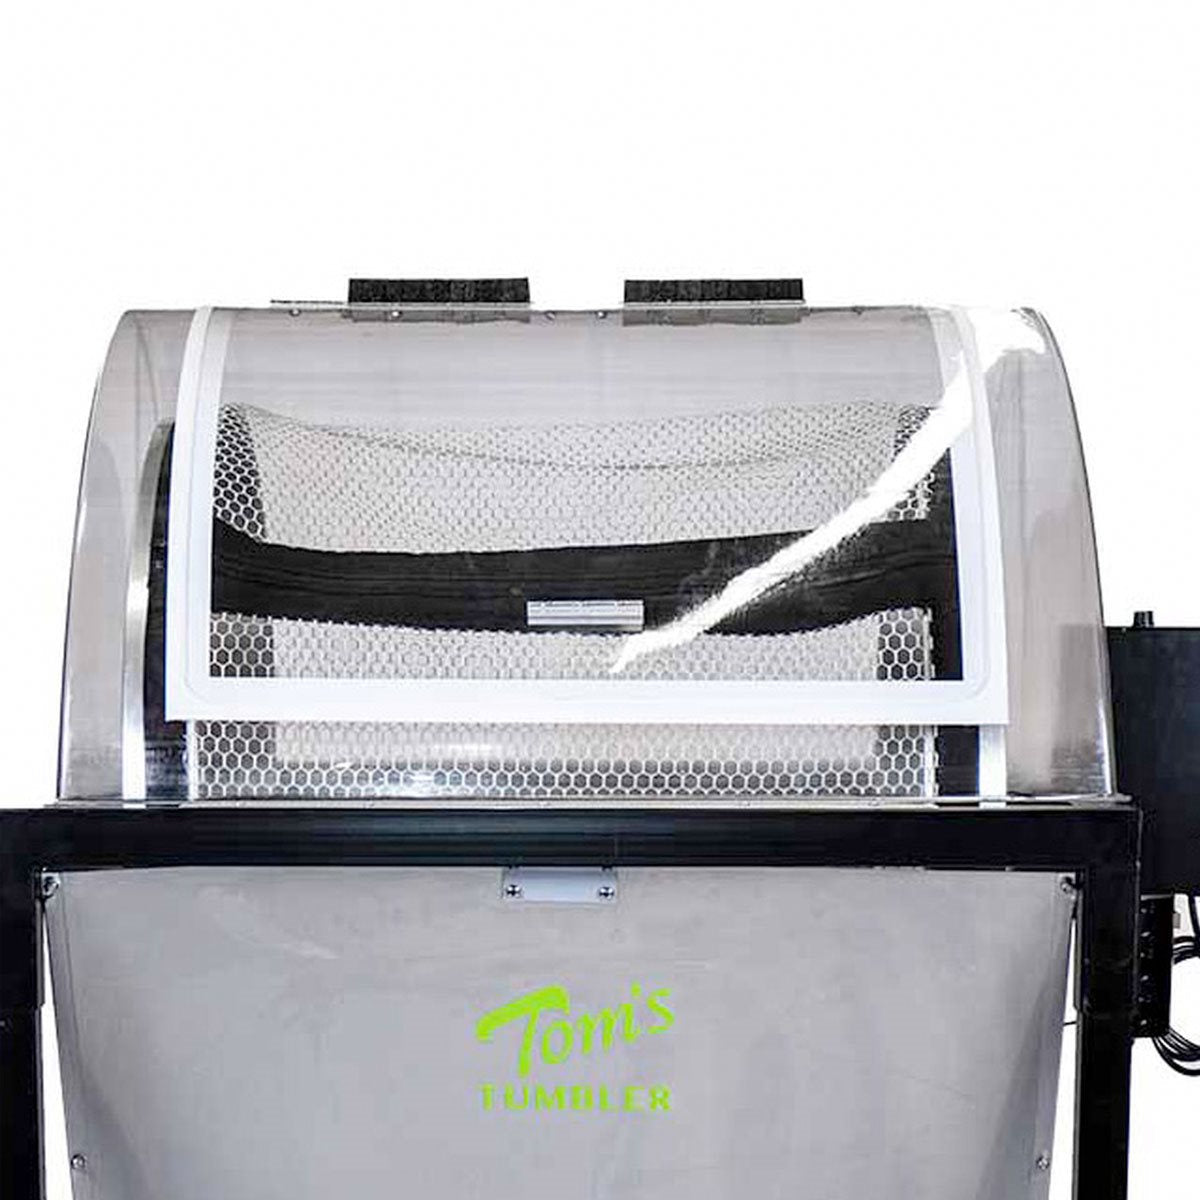 Product Image:Tom's Tumbler 3000 Housse anti-poussière (Dôme)